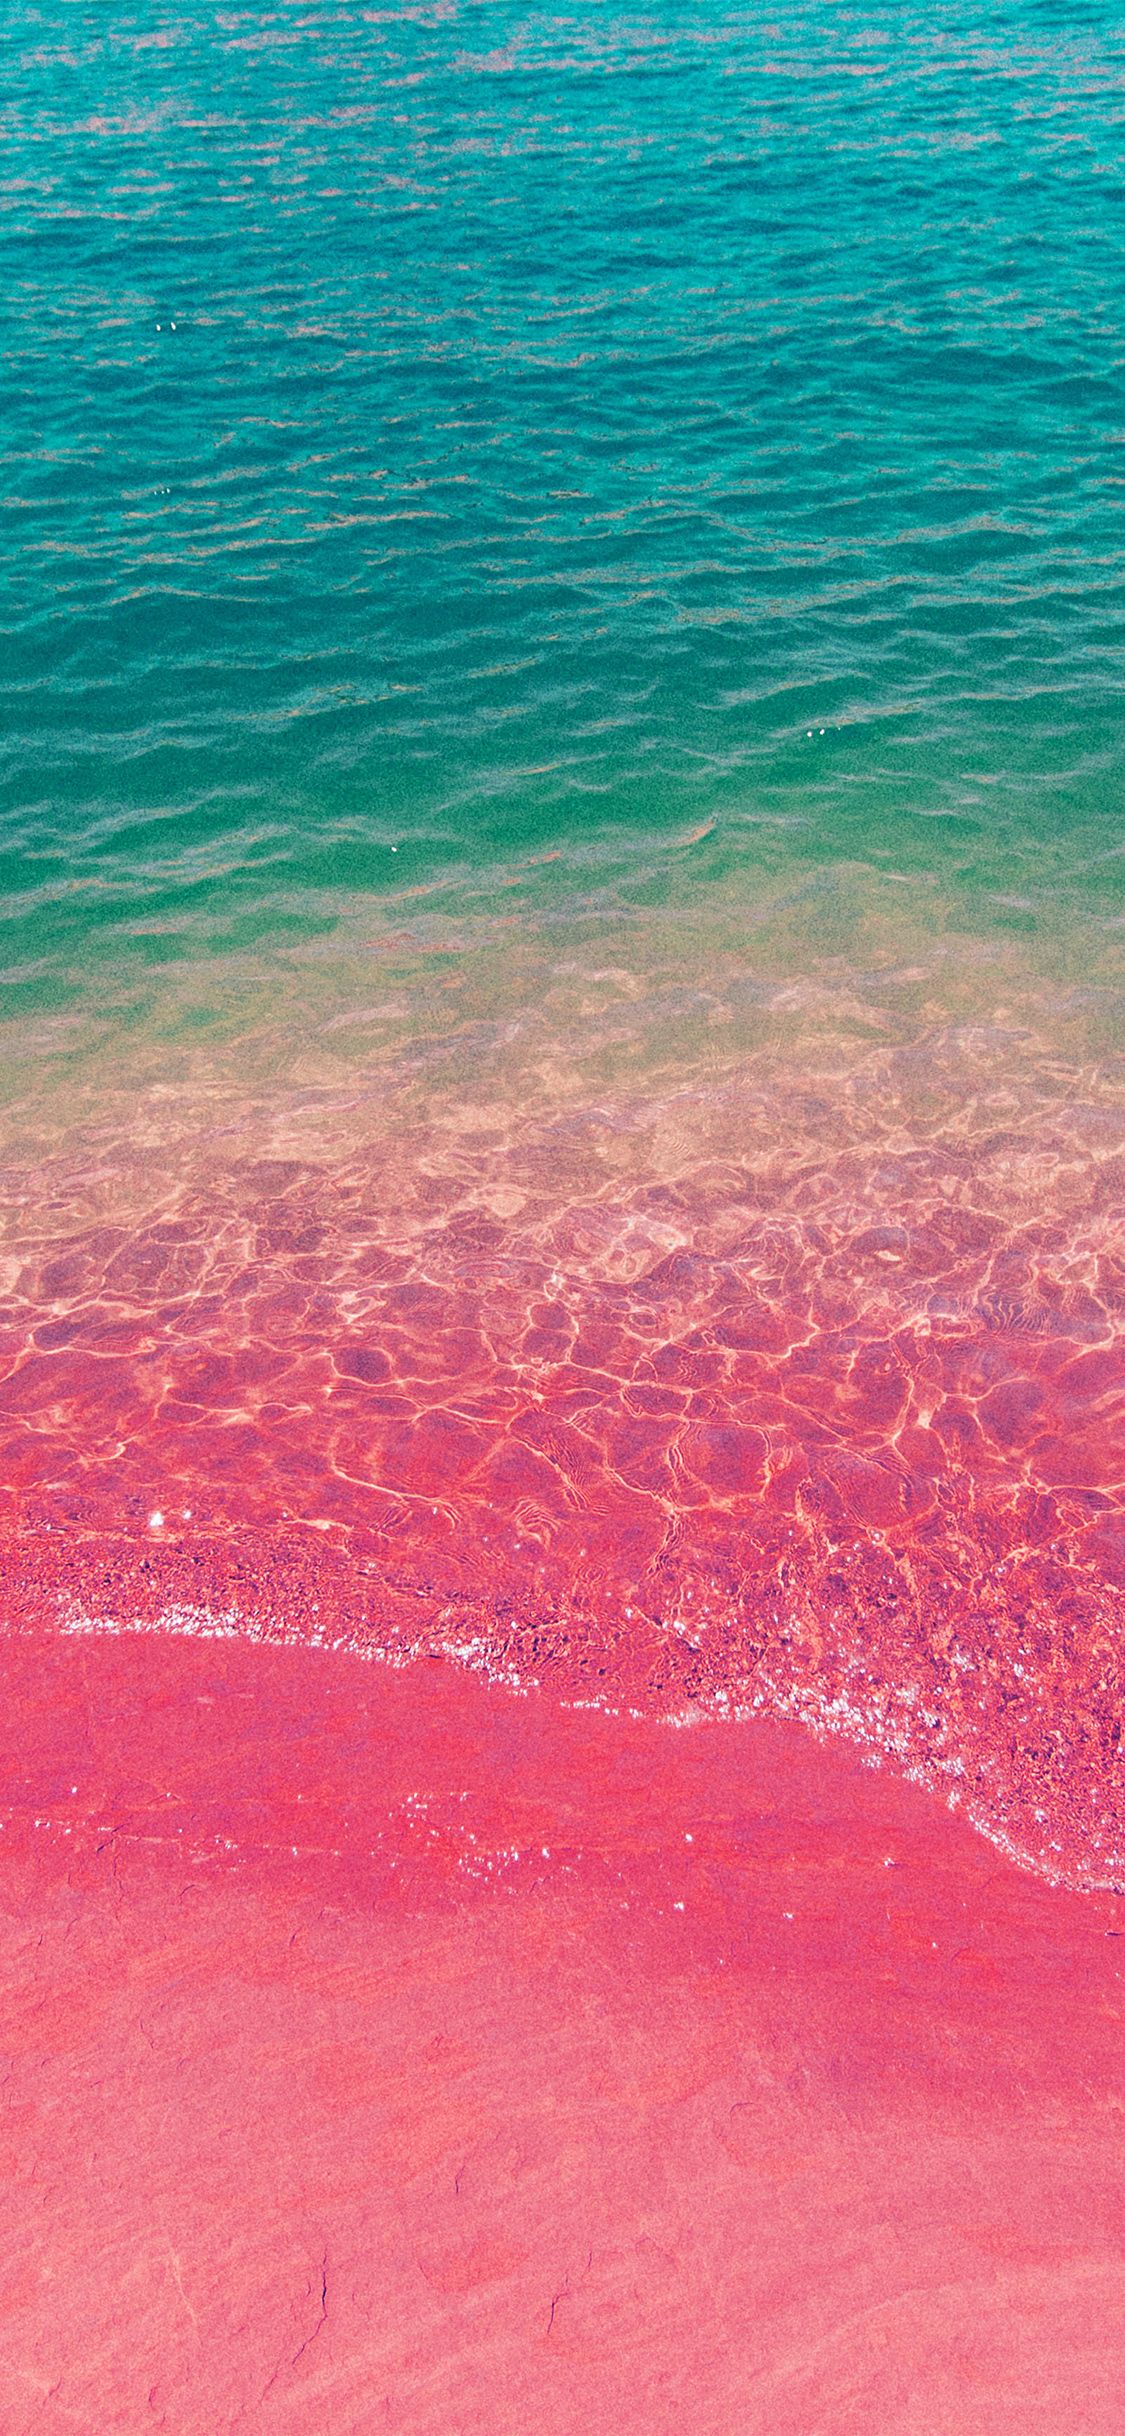 iPhone X wallpaper. sea water beach